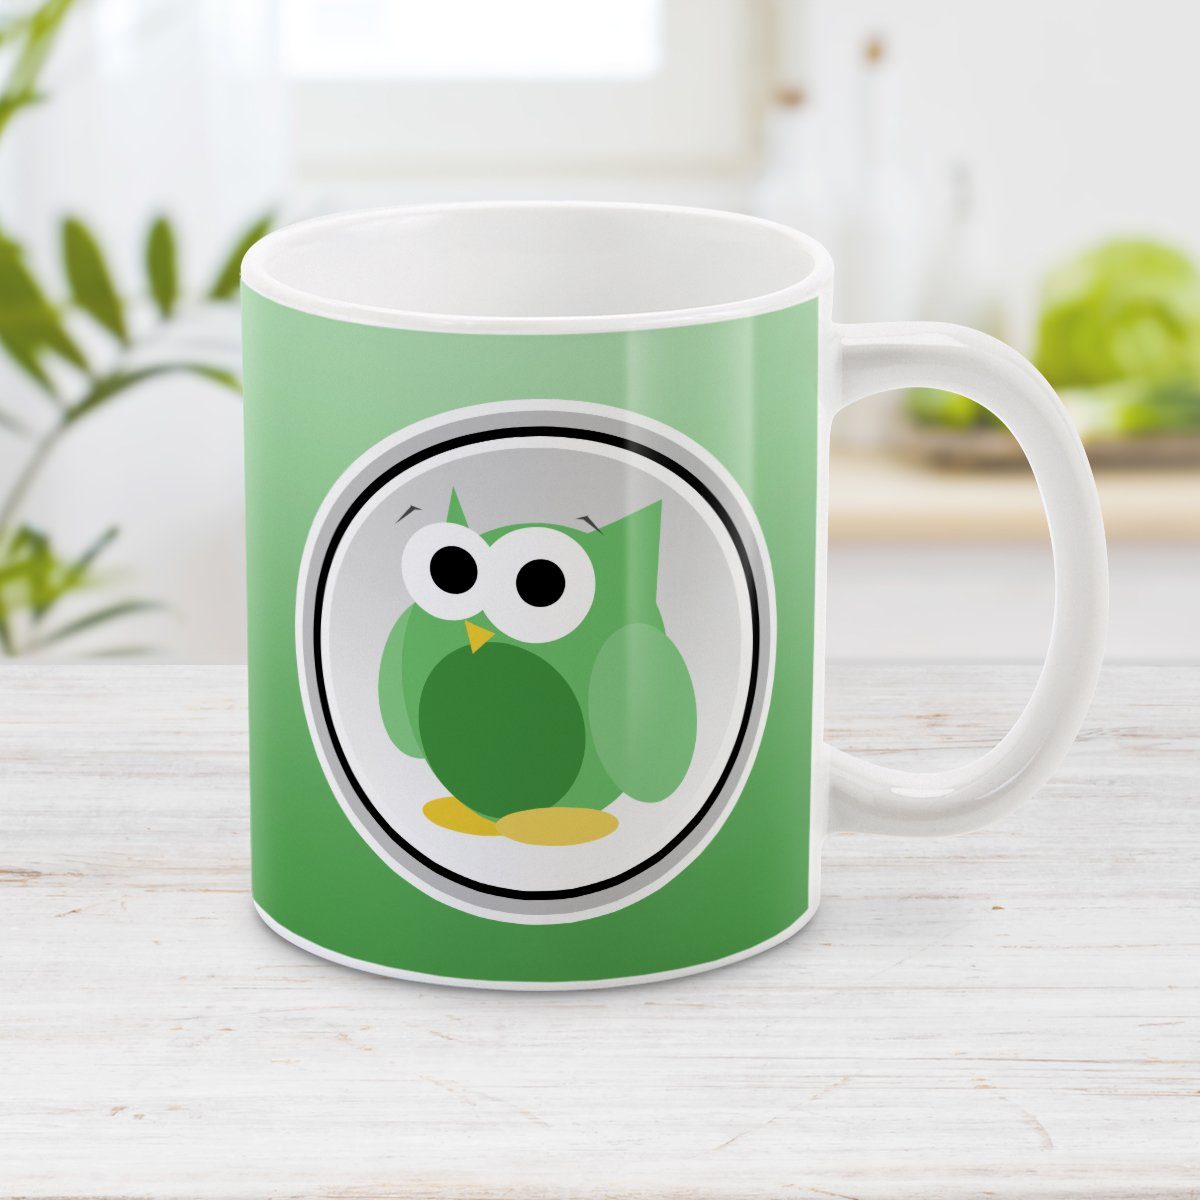 Green Owl Mug - Funny Cute Green Owl Mug at Amy's Coffee Mugs